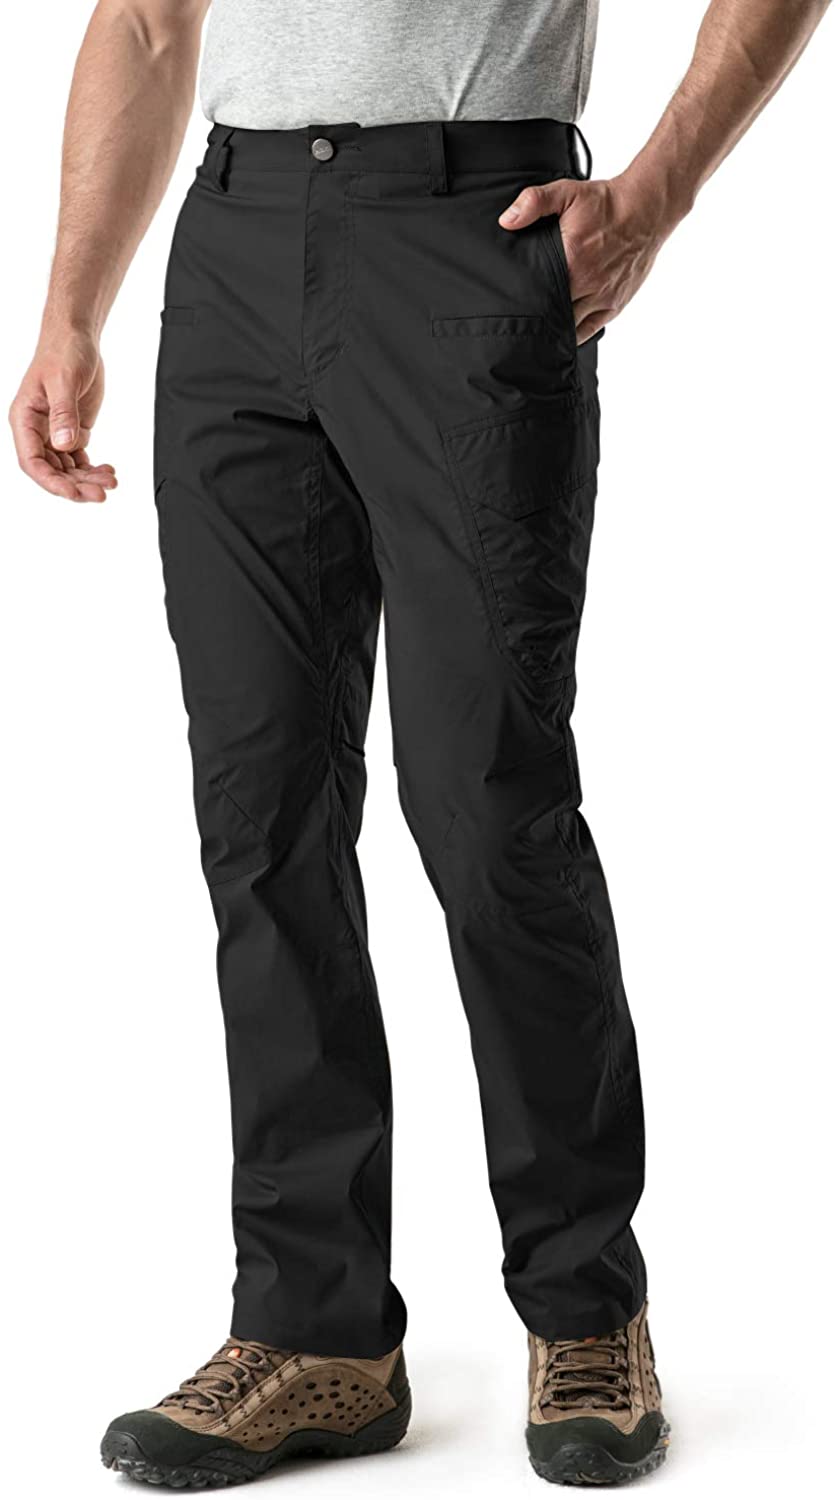 Work Outdoor Pants Water Repellent Hiking Bottoms CQR Mens Convertible Cargo Trousers Zip Off Lightweight Stretch UPF 50 